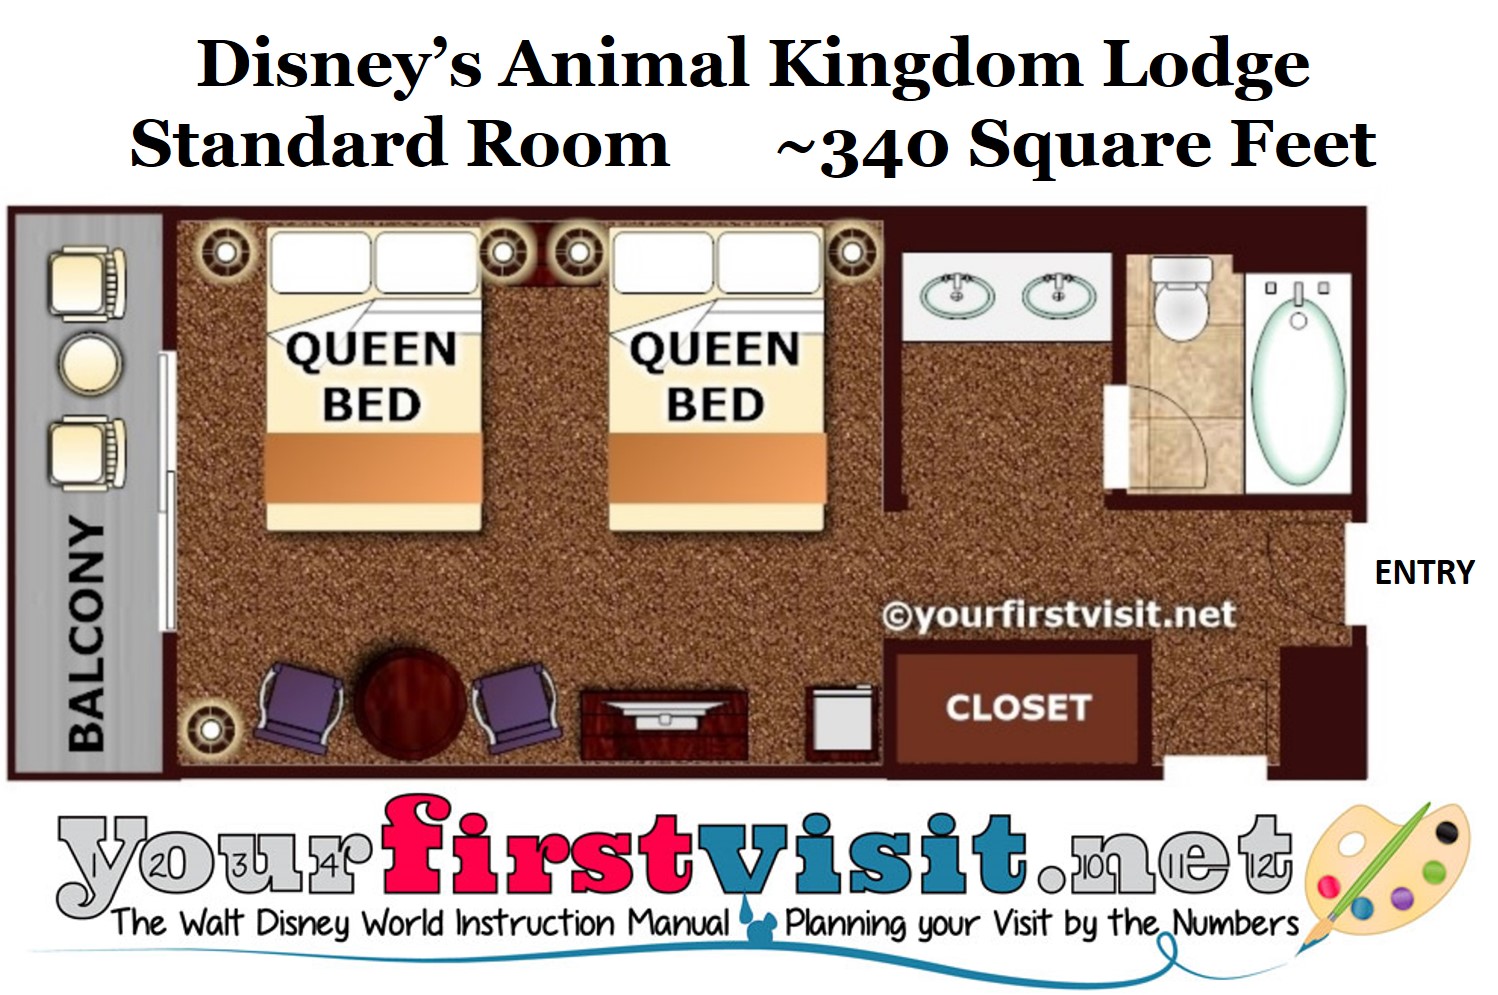 Photo Tour of a Standard Room at Disney's Animal Kingdom